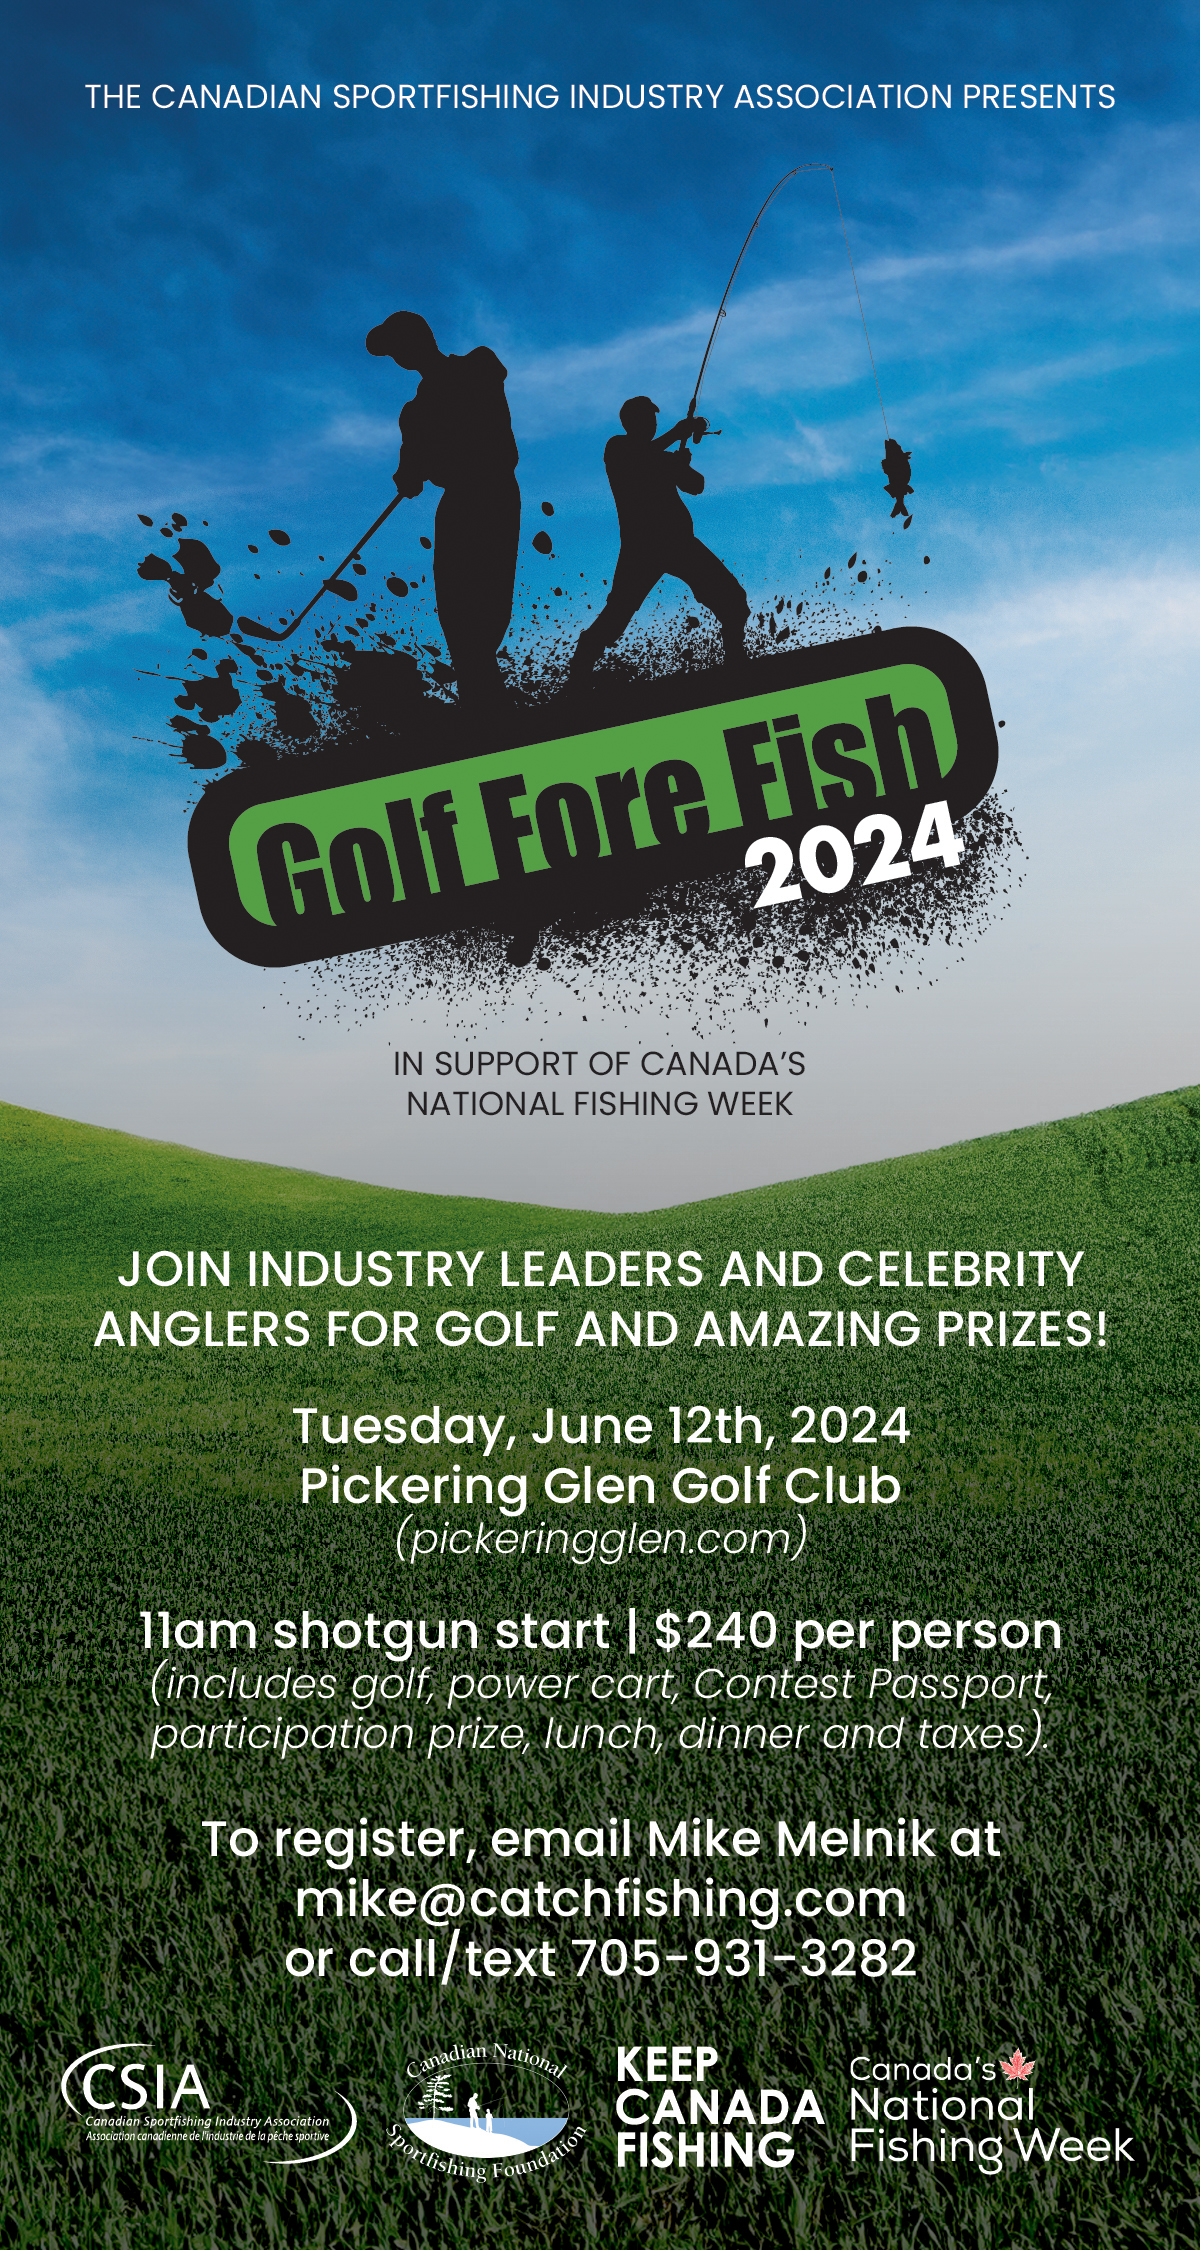 Golf Fore Fish 2024 - Keep Canada Fishing